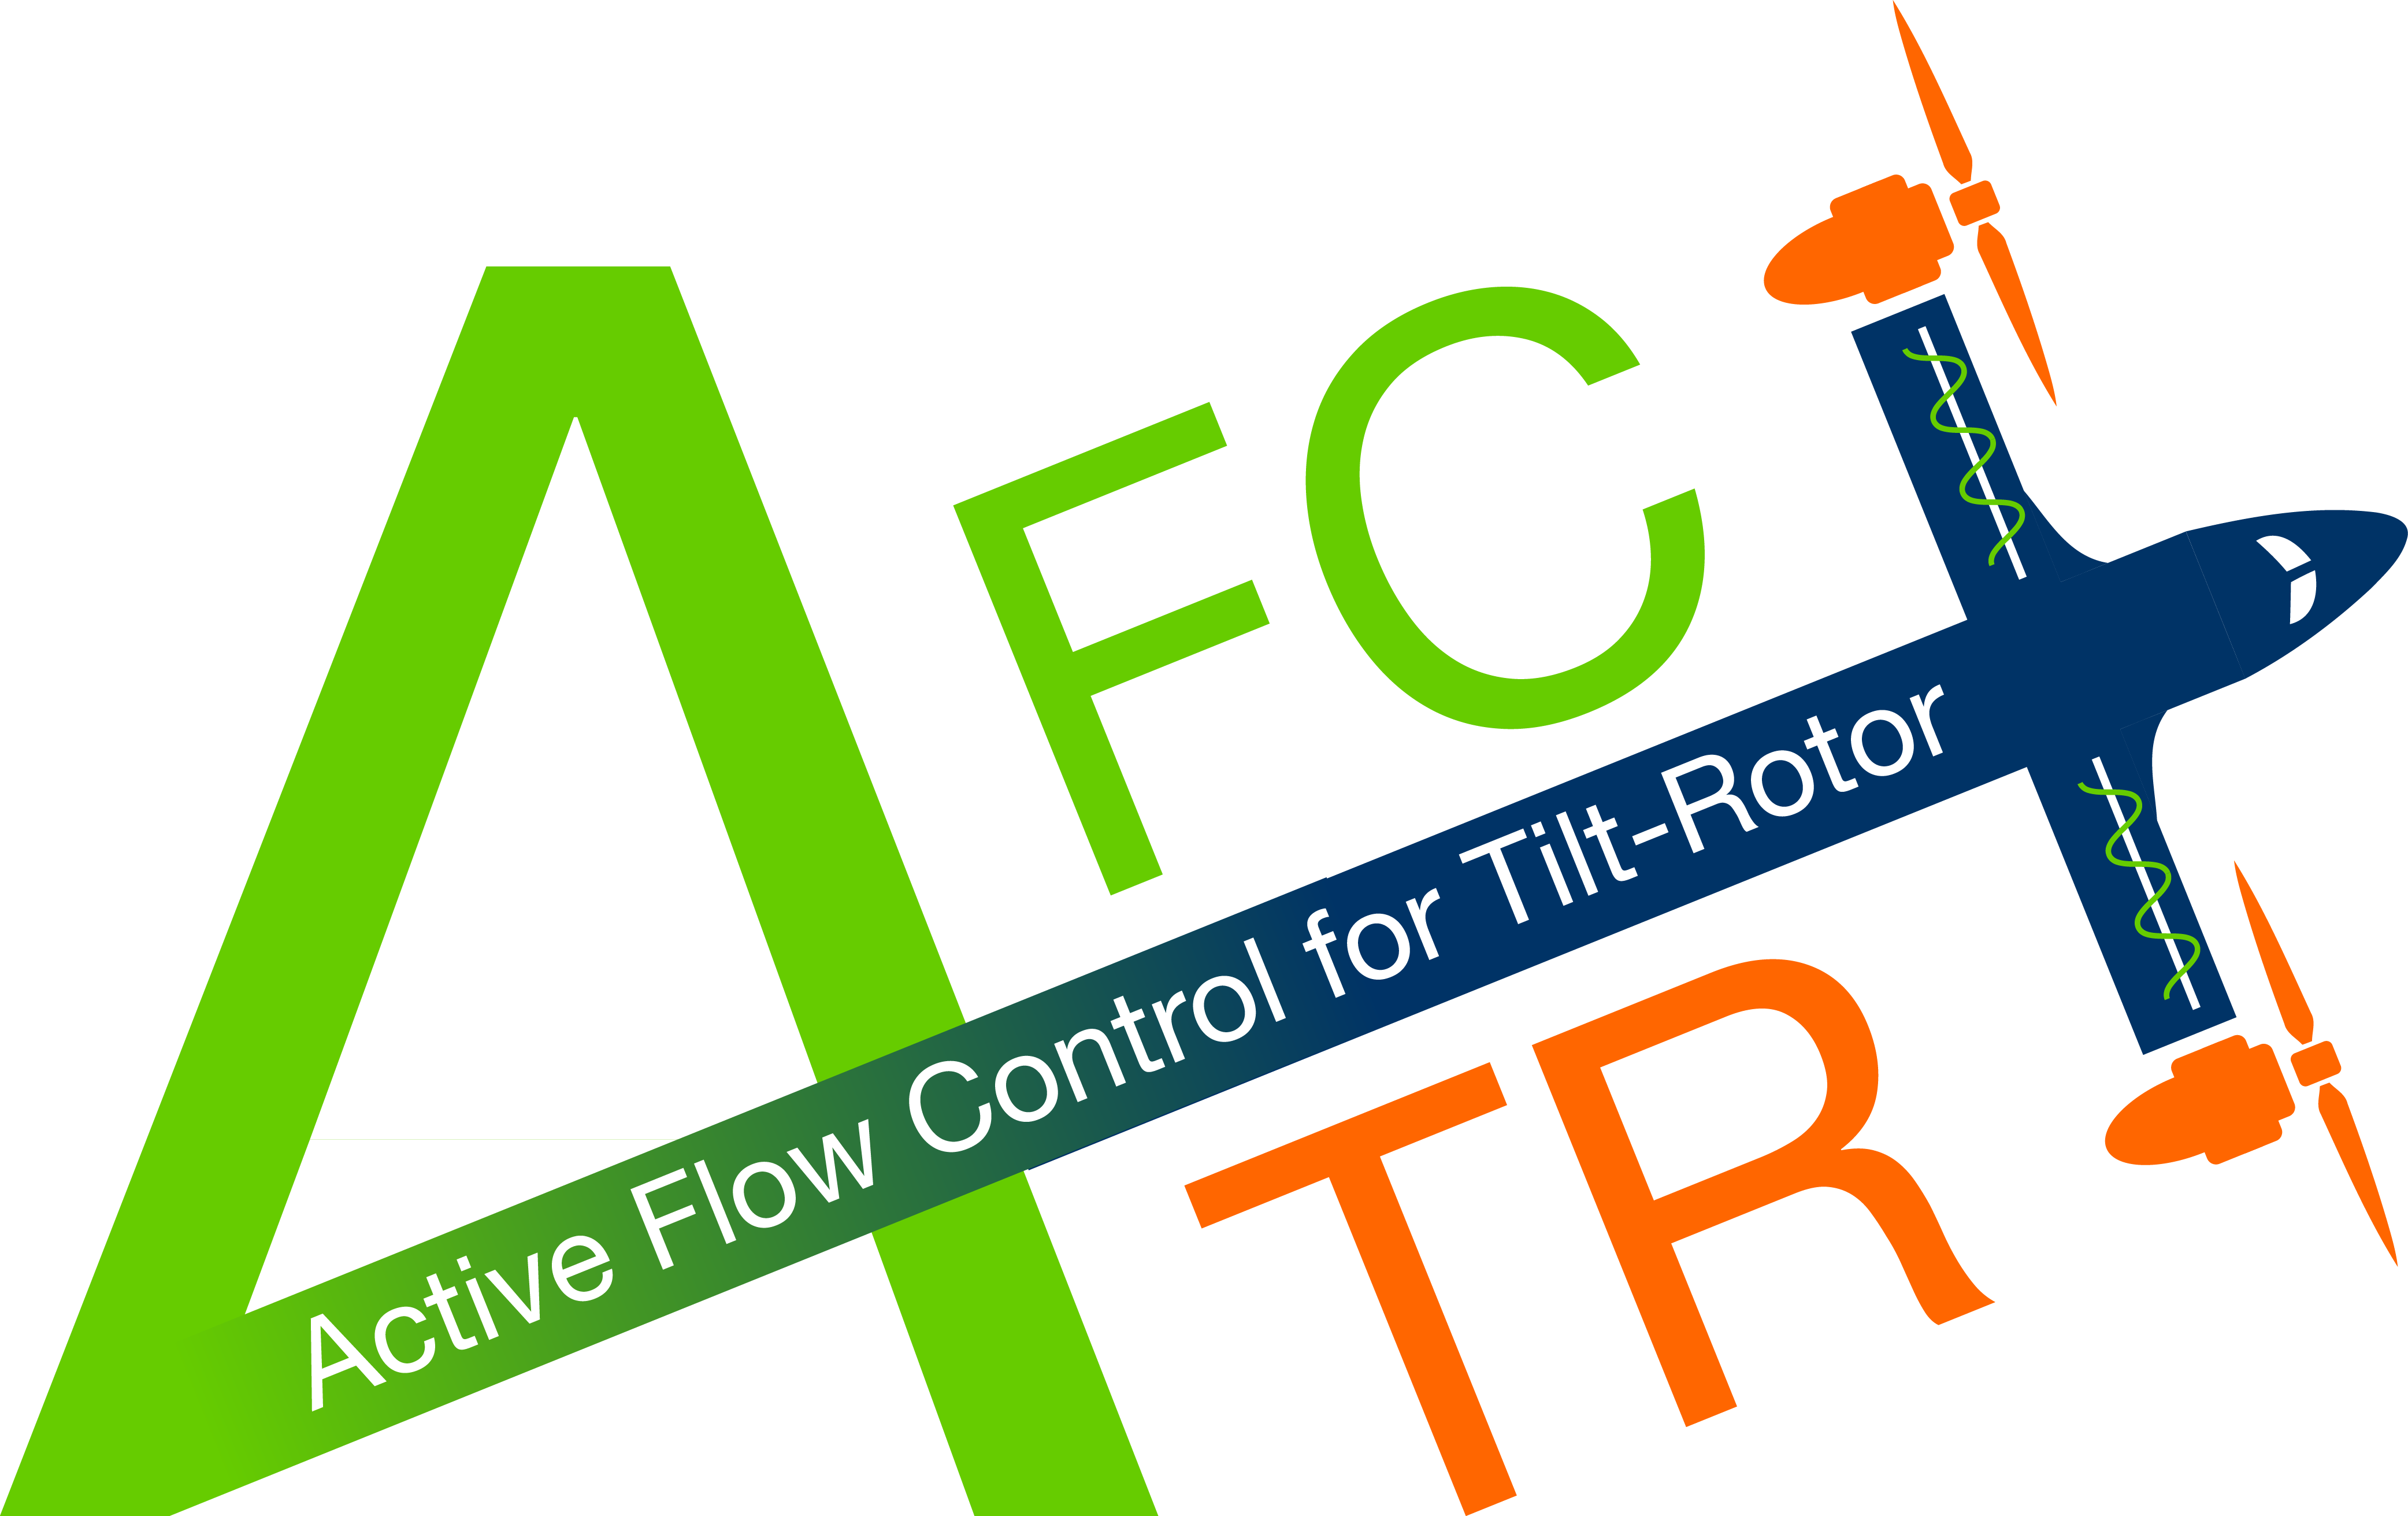 Active Flow Control for Tilt-Rotor